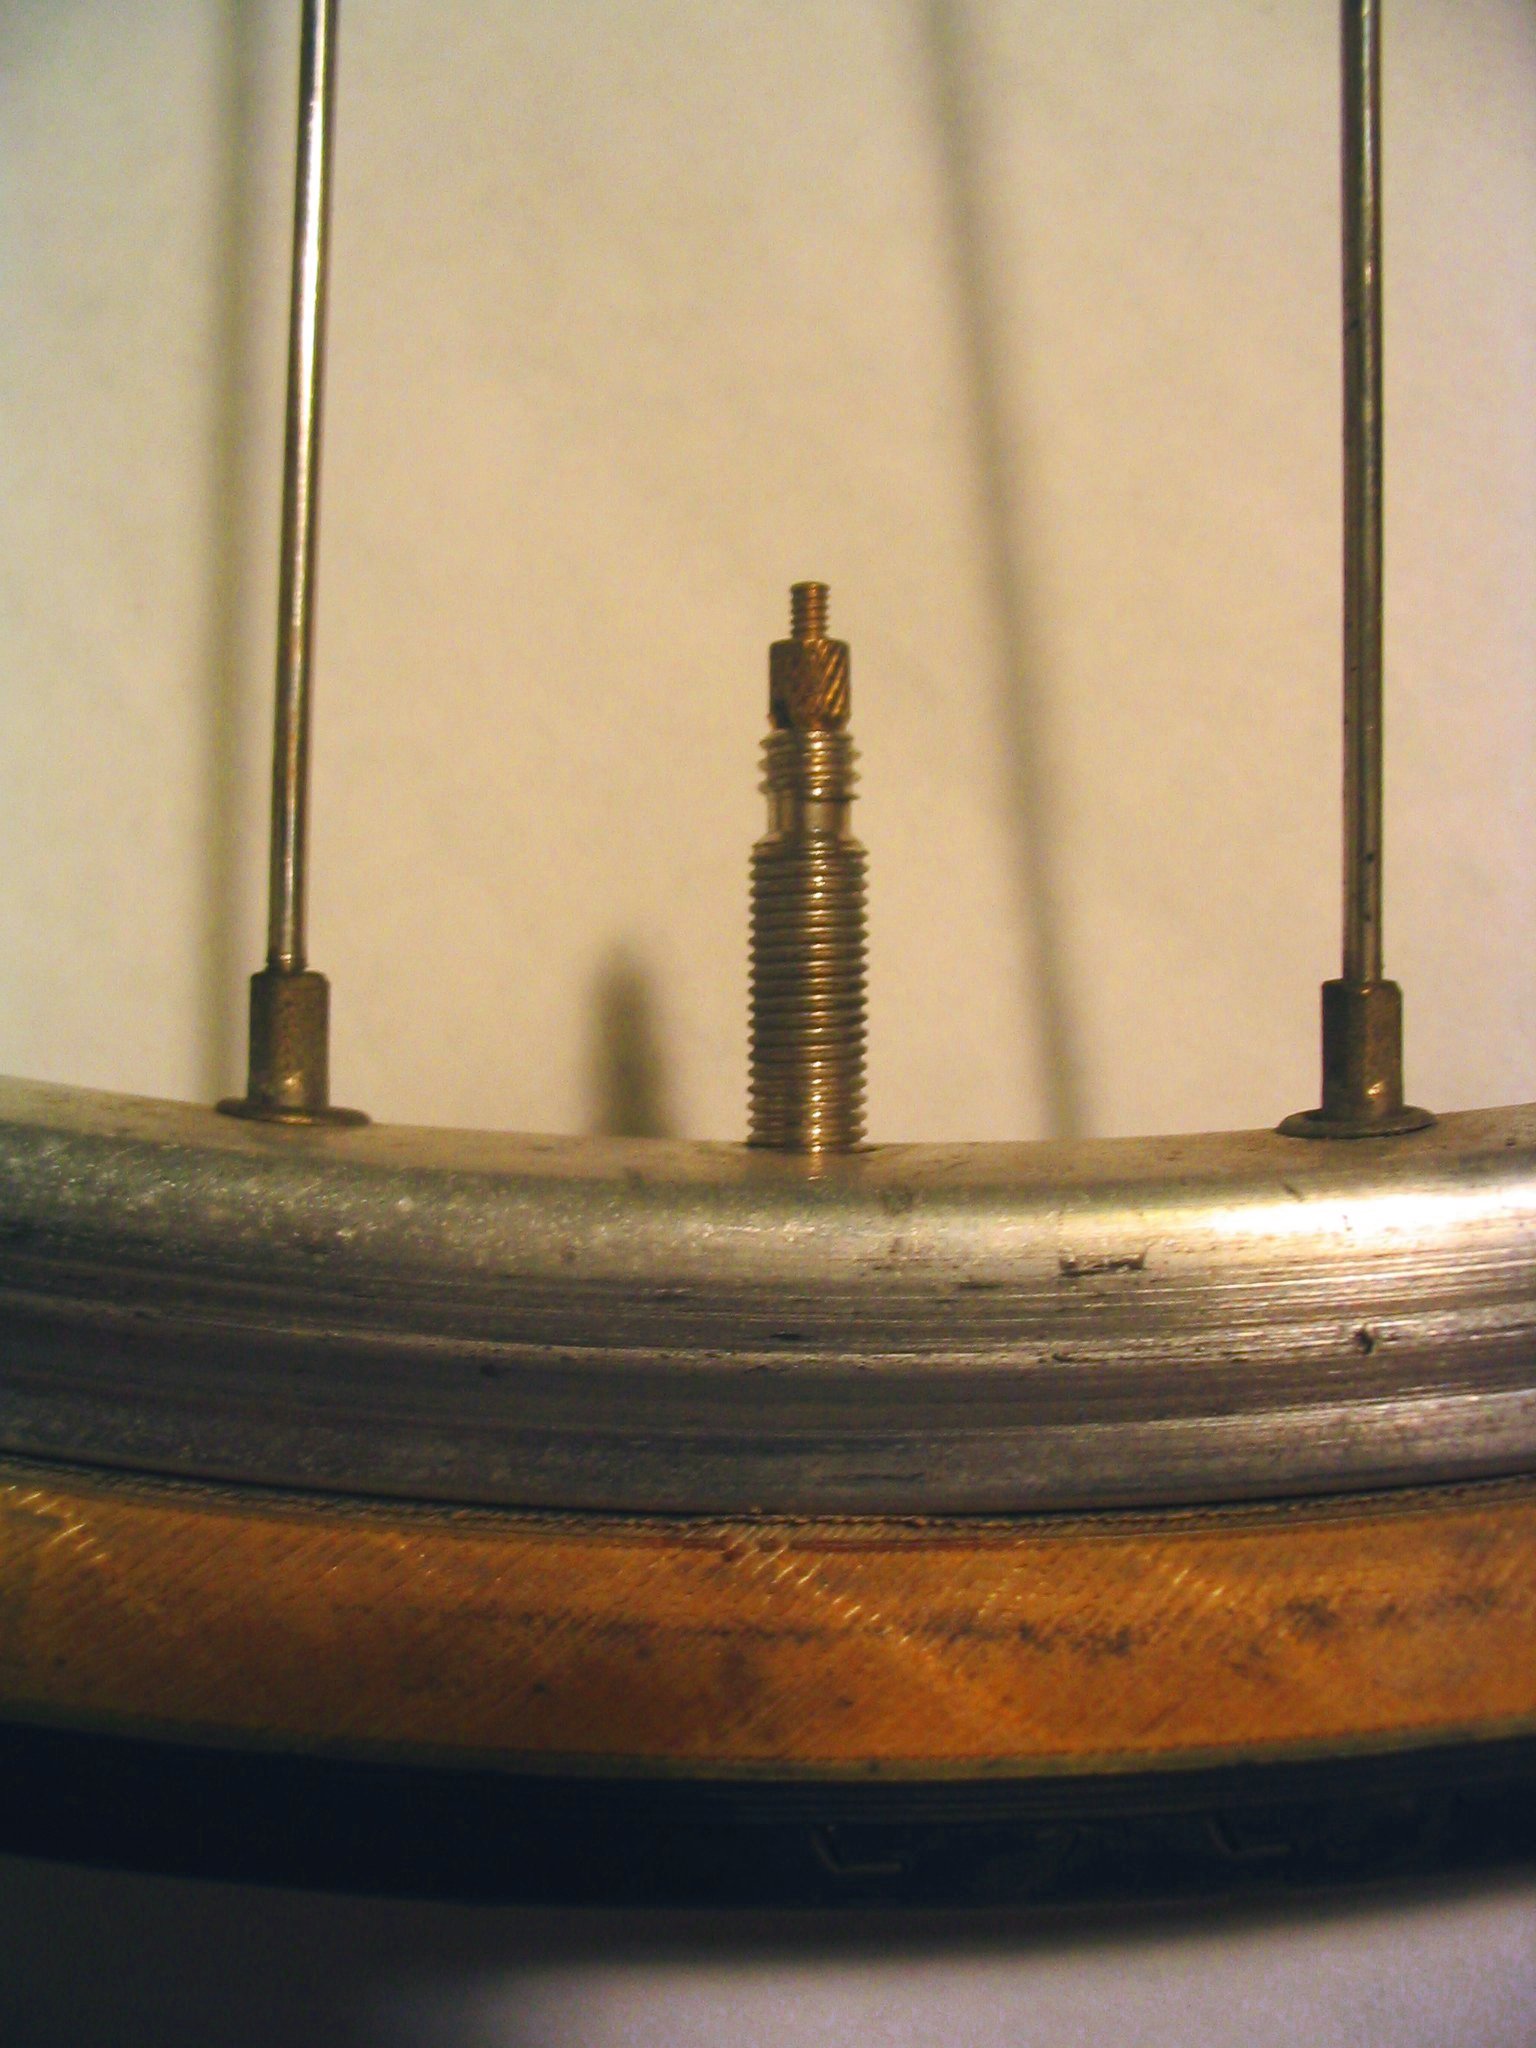 bike tire air valve types